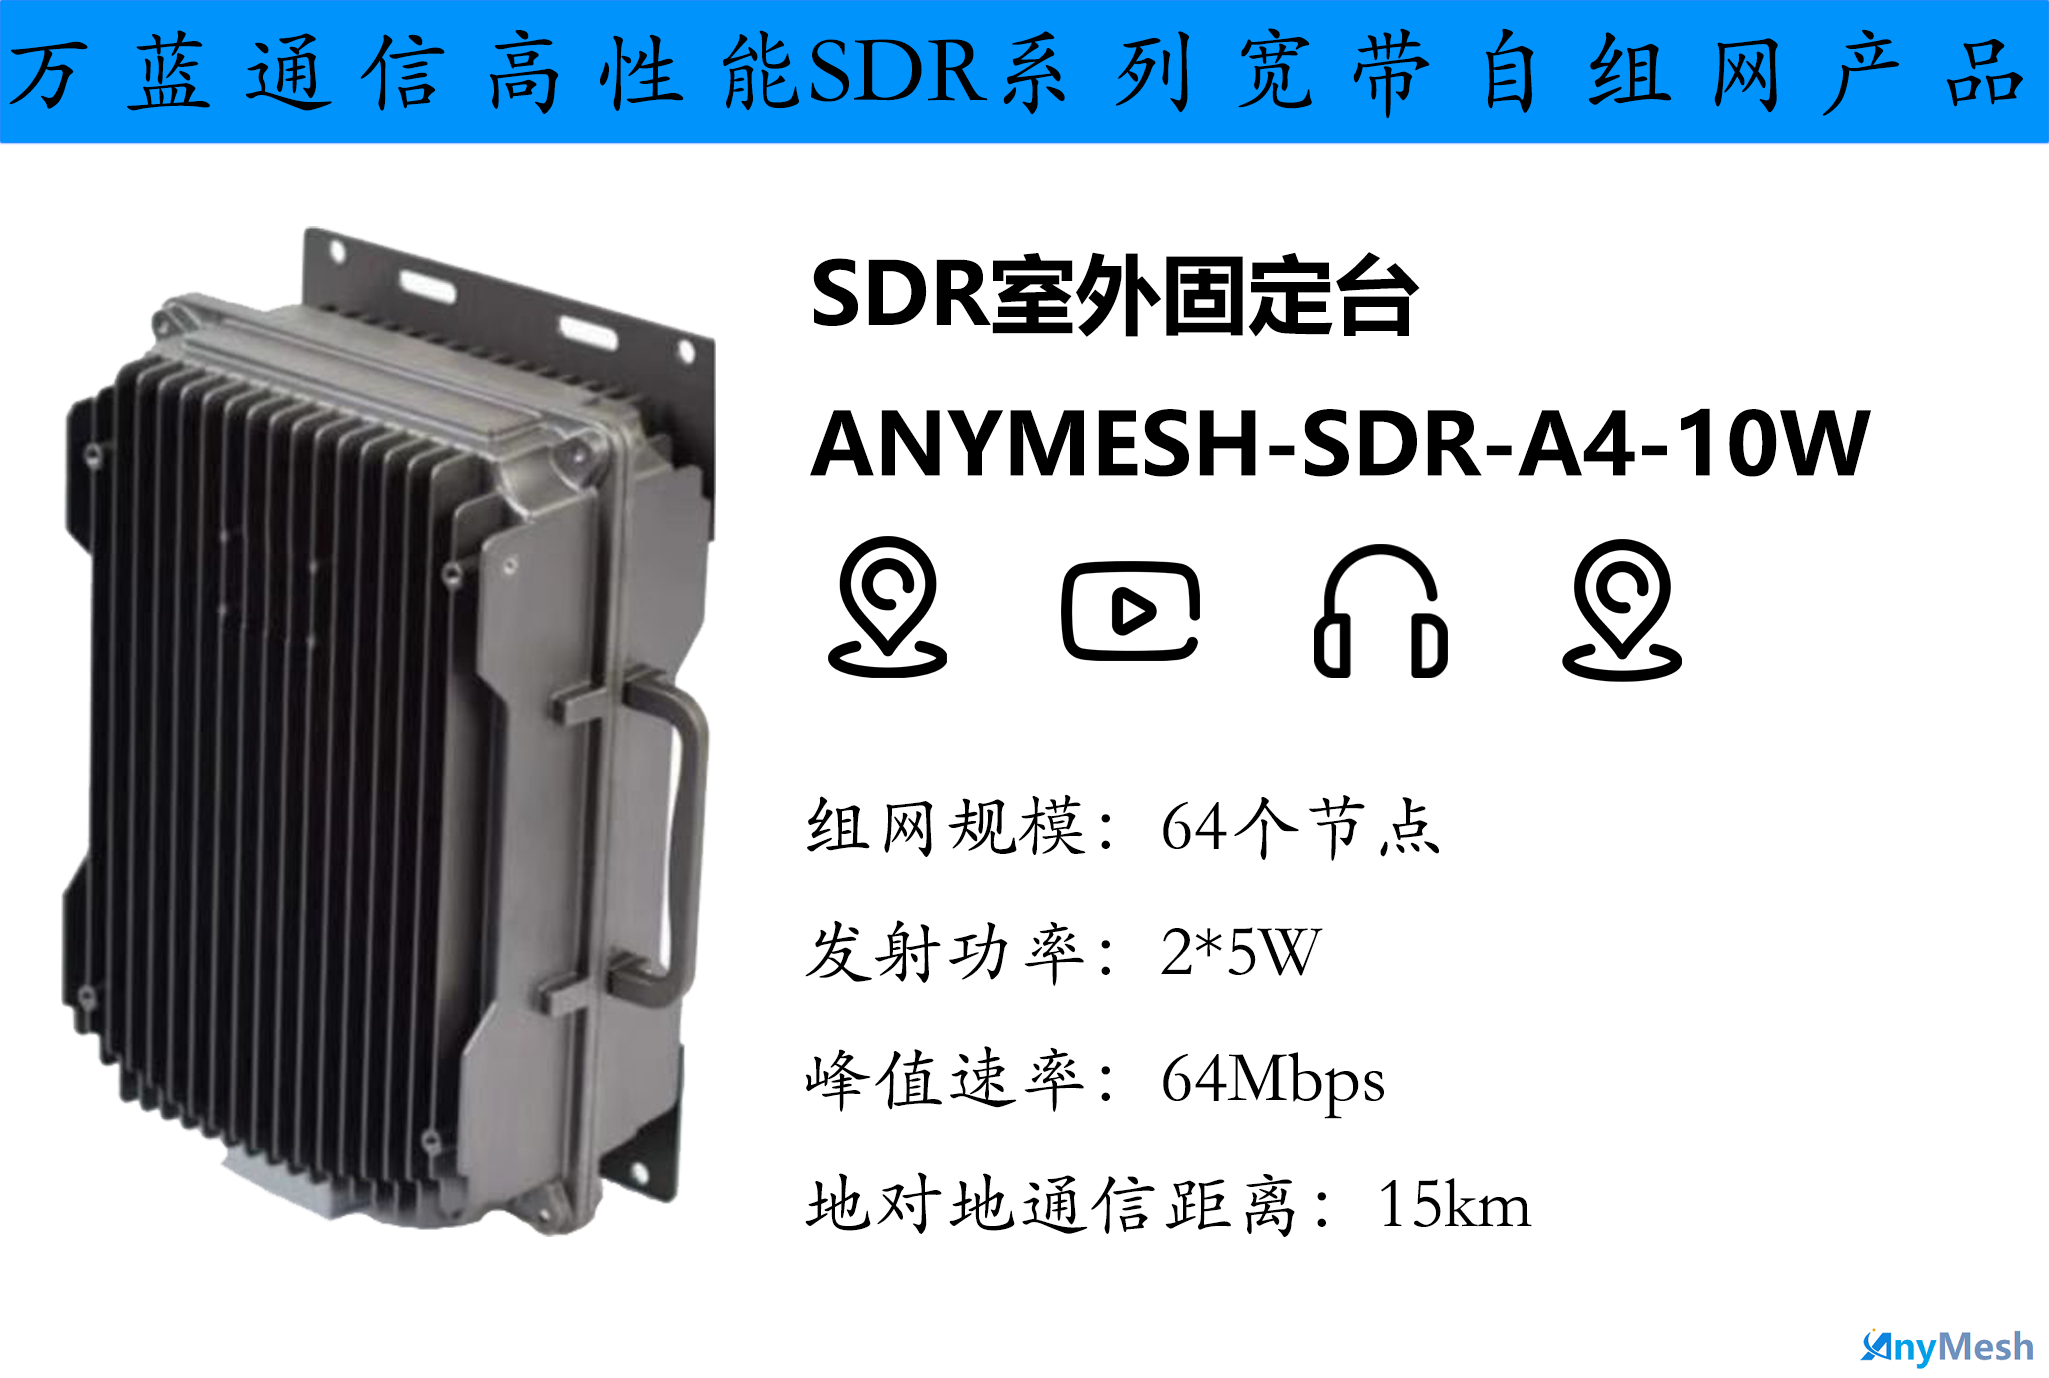 ANYMESH-SDR-A4室外基站型自组网设备 10W自组